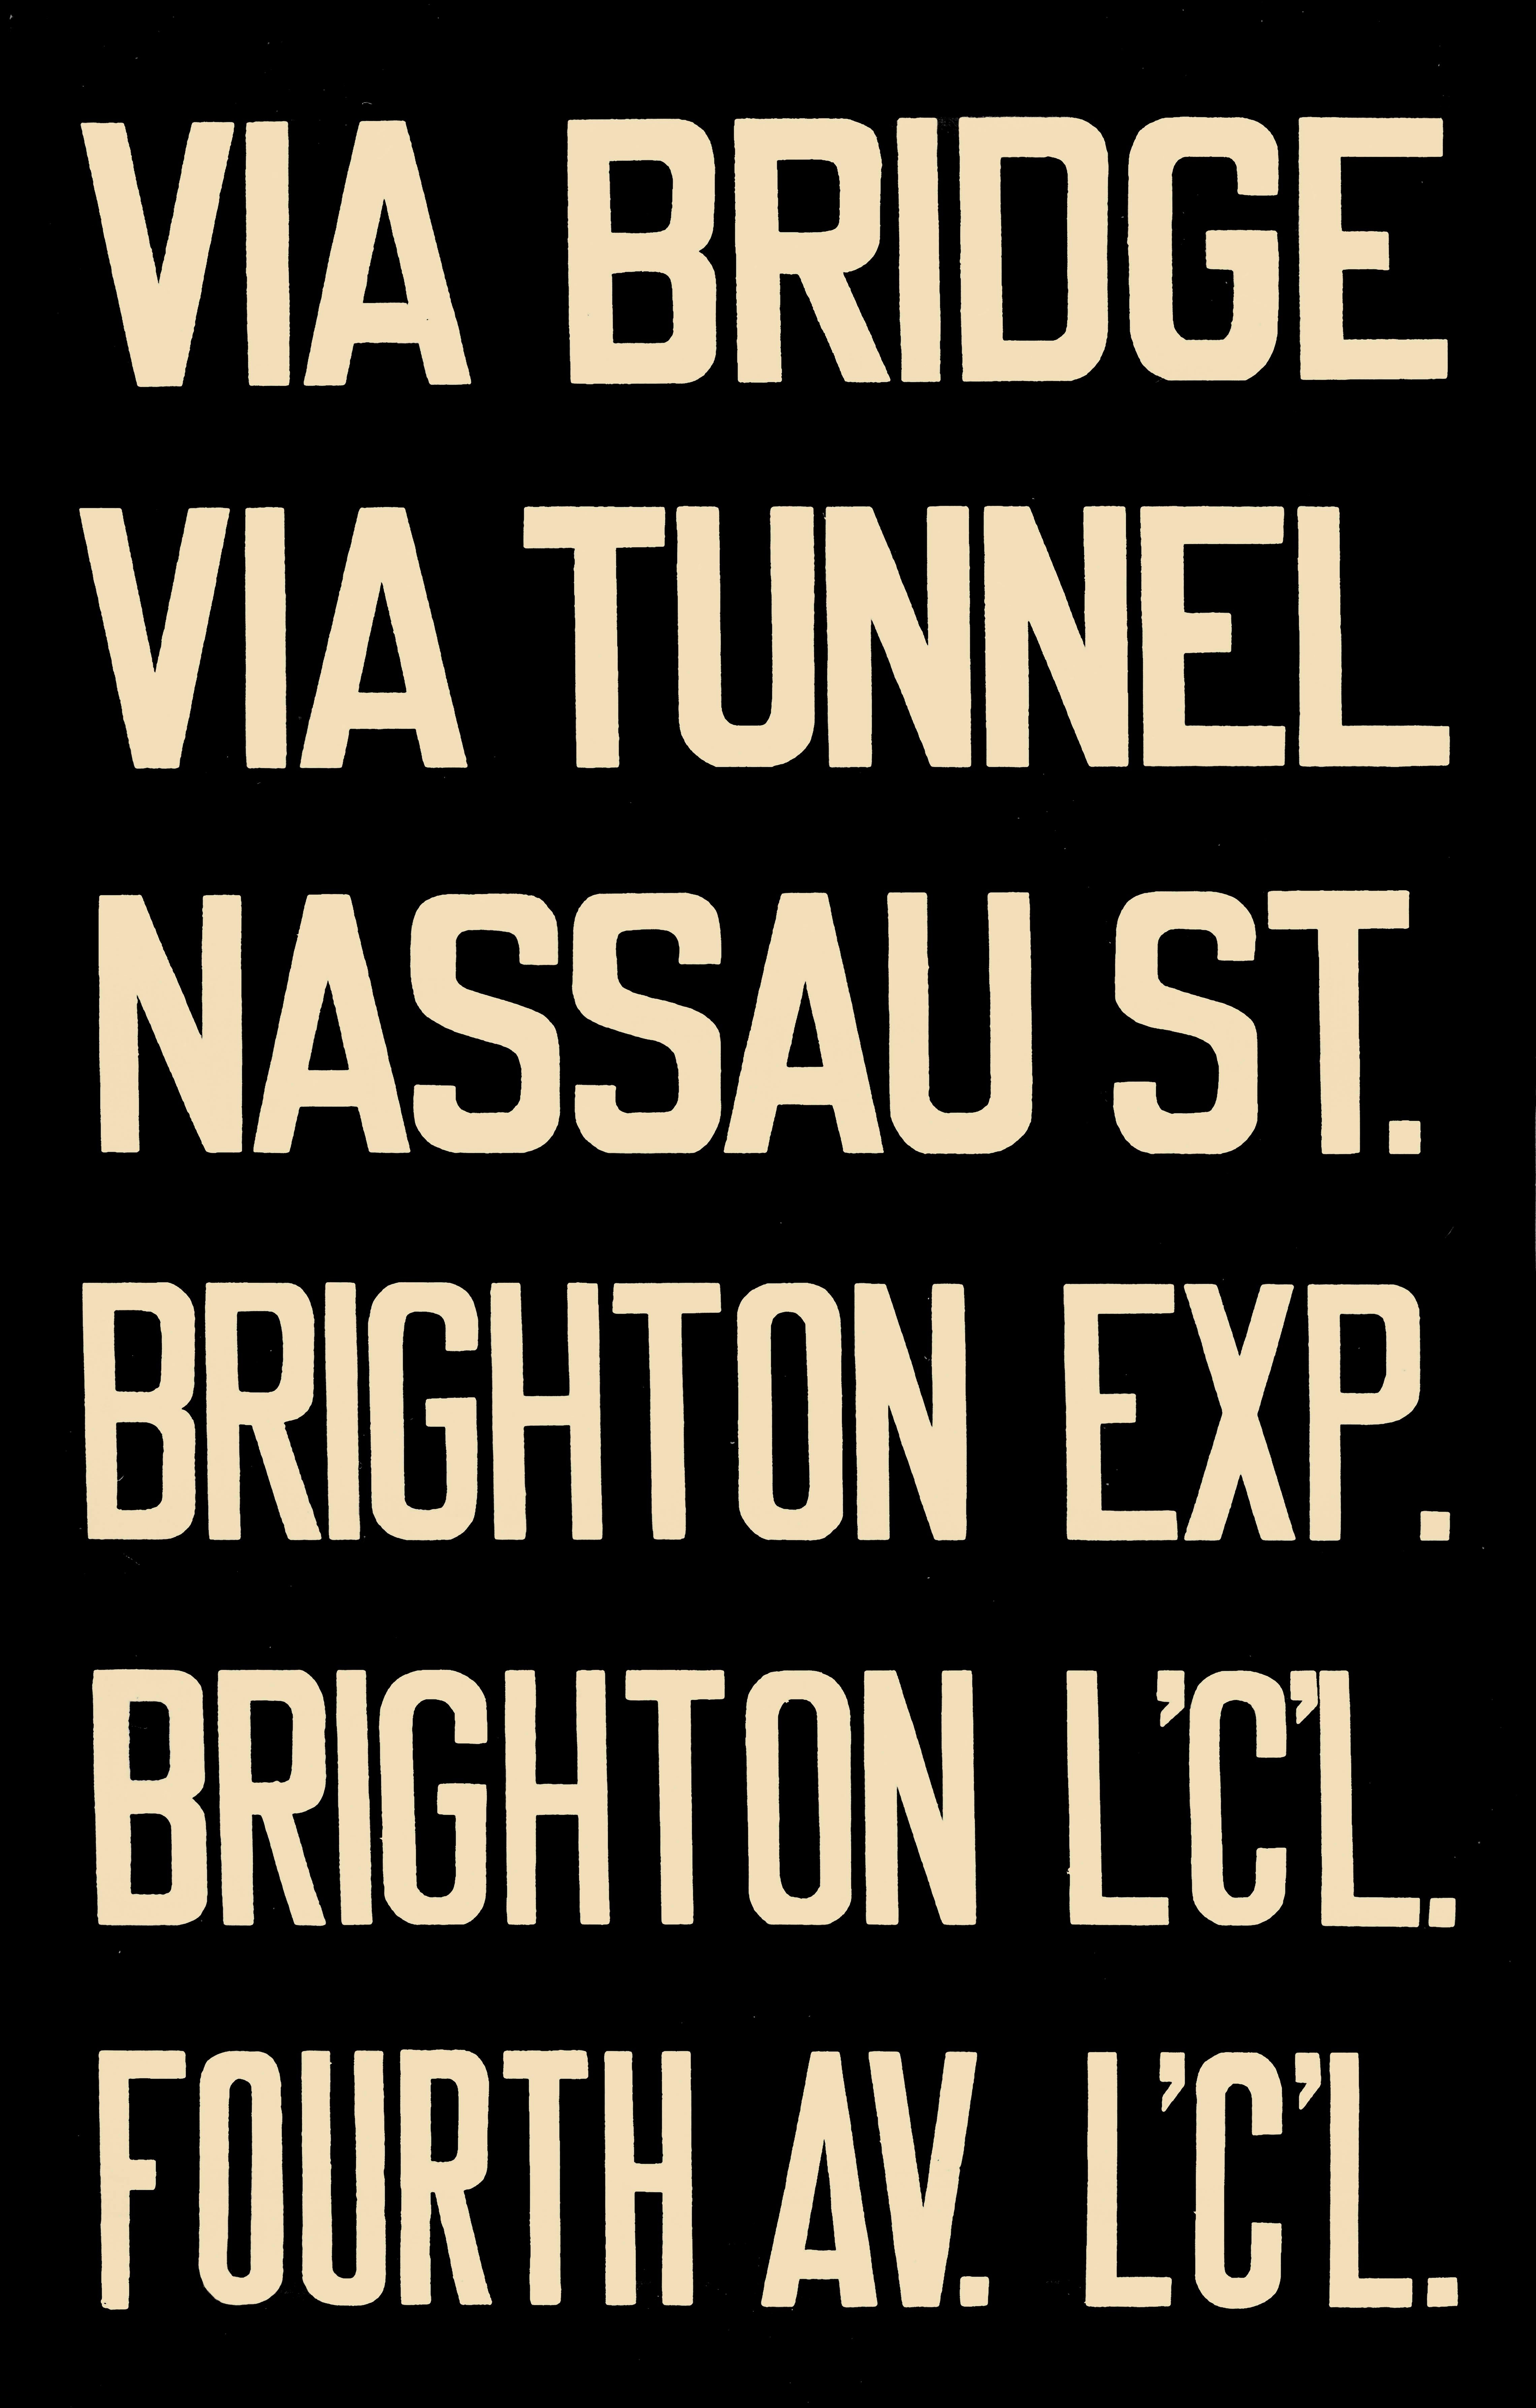 NYC subway sign - Nassau St / Brighton Express